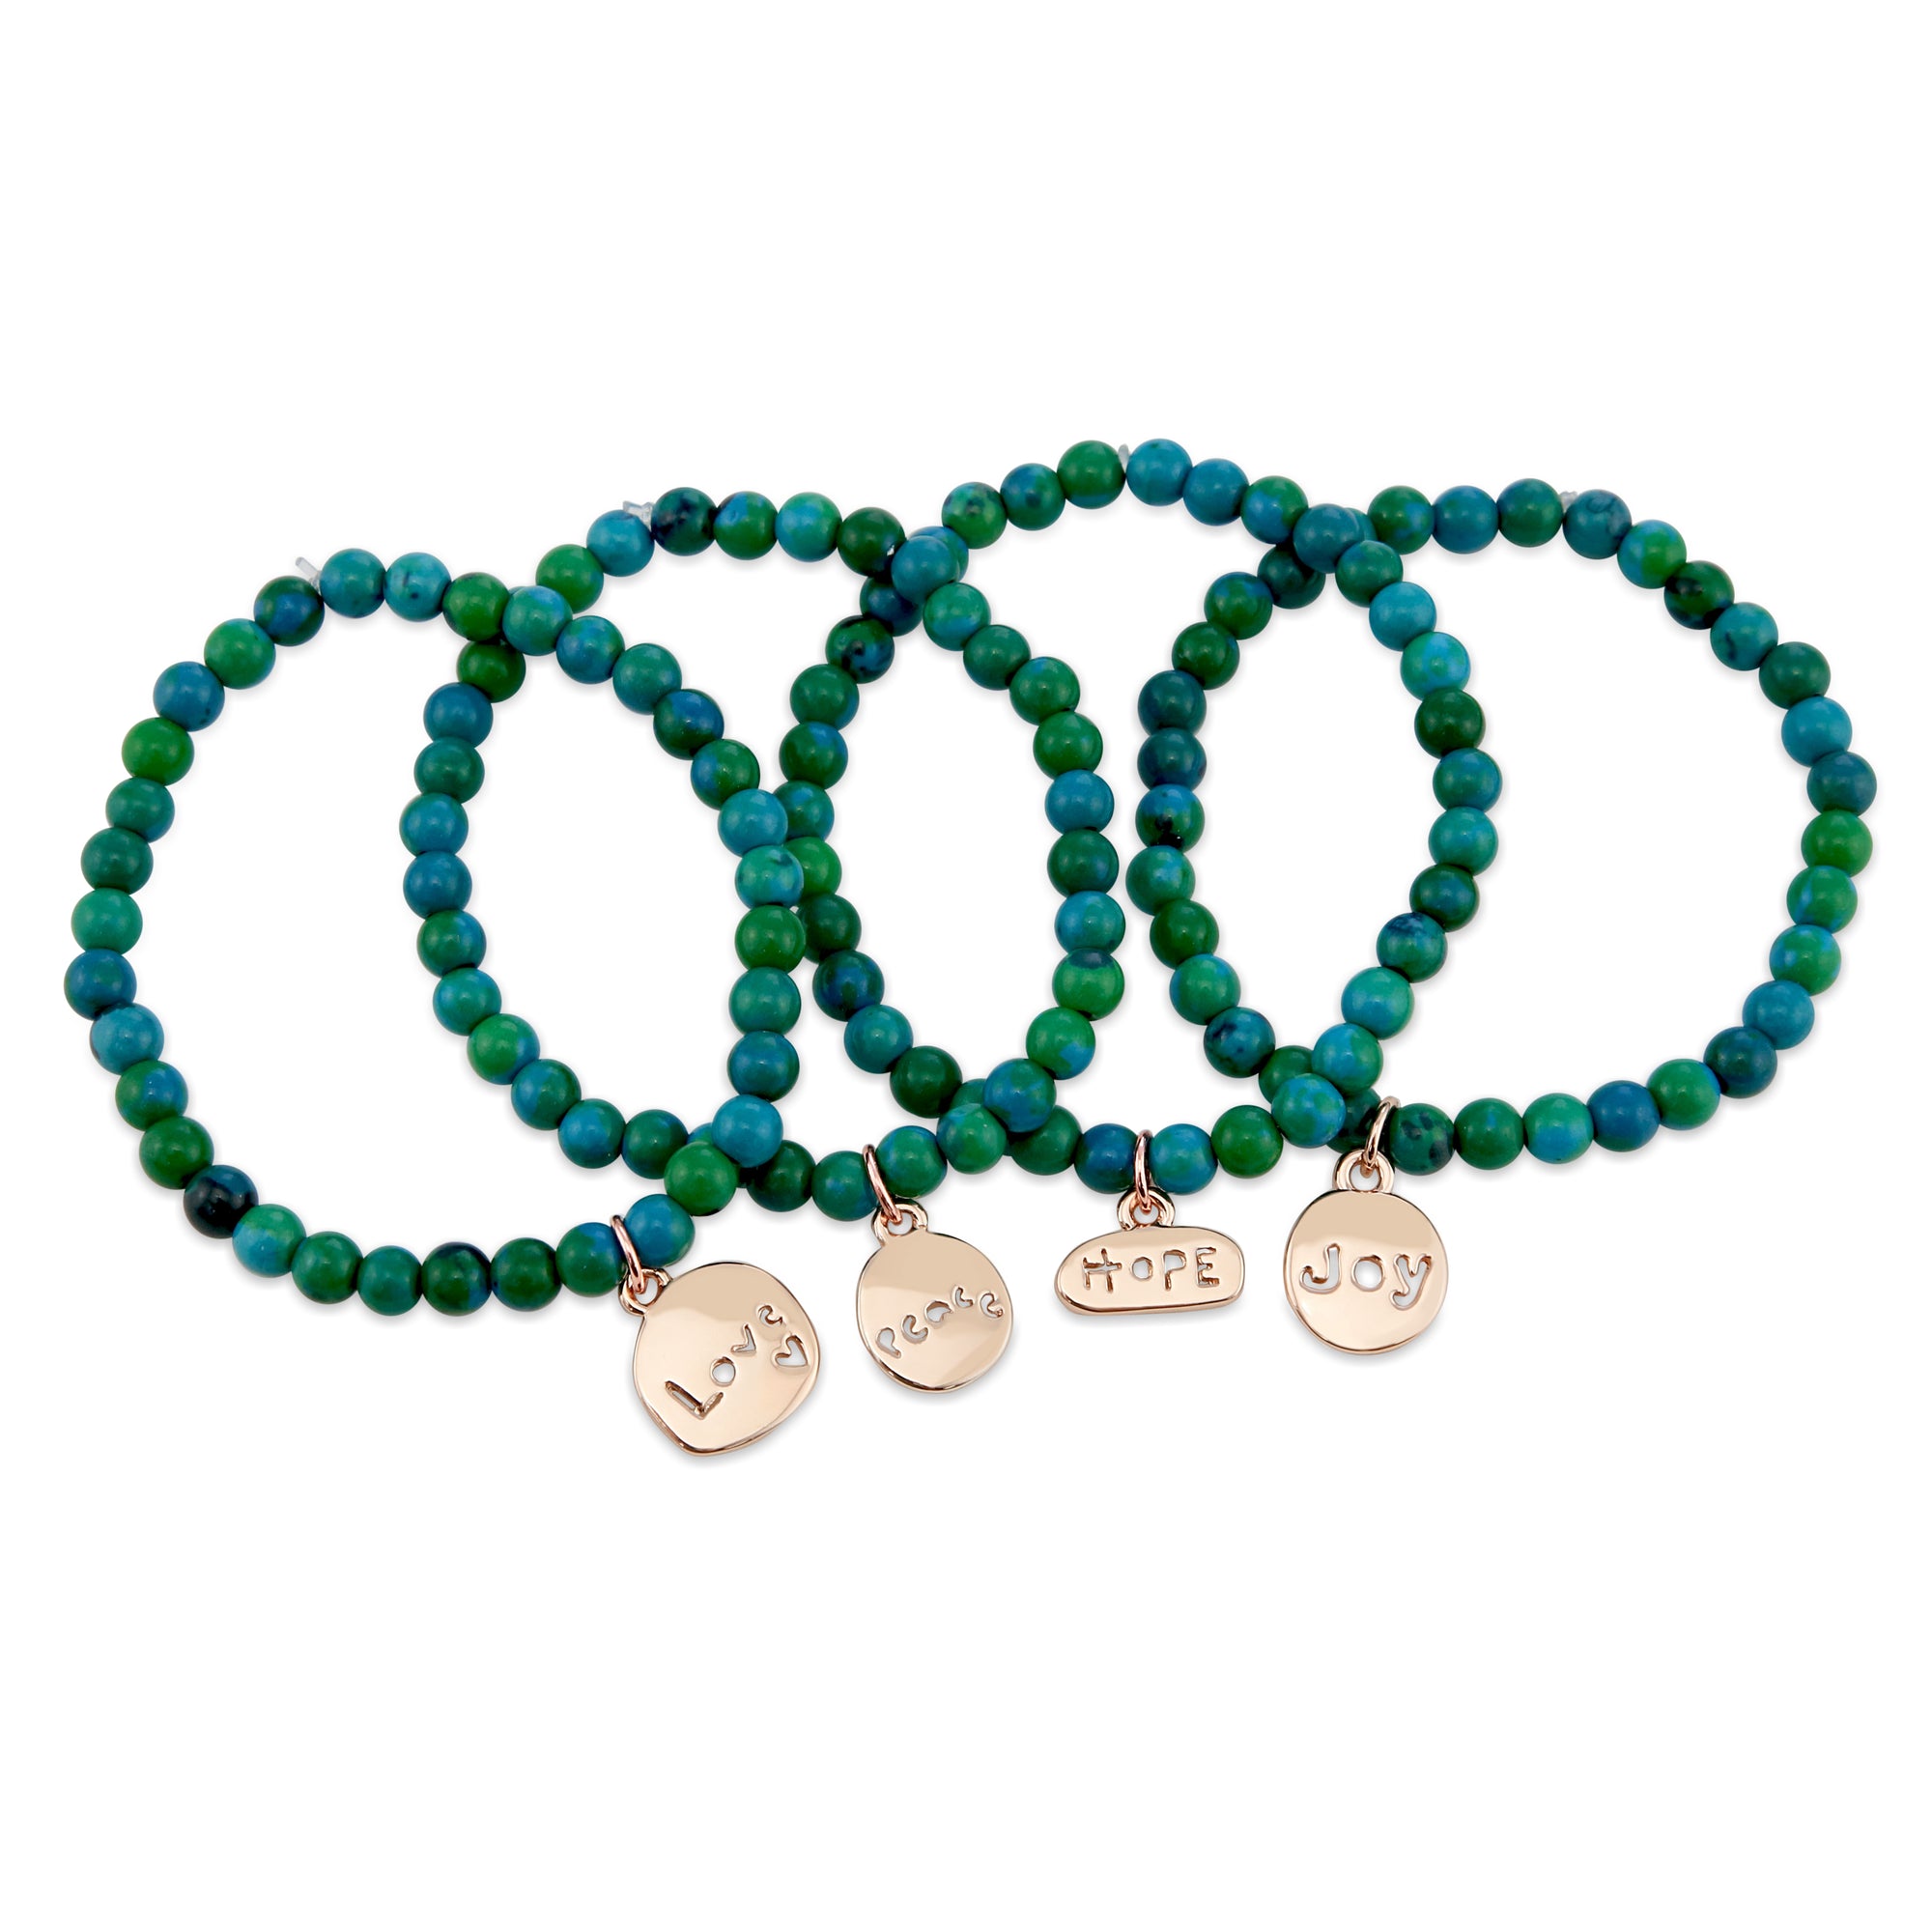 Christmas Bracelet - Green & Aqua Lapis 6mm Stone Bead Bracelet with Rose Gold Word Charm